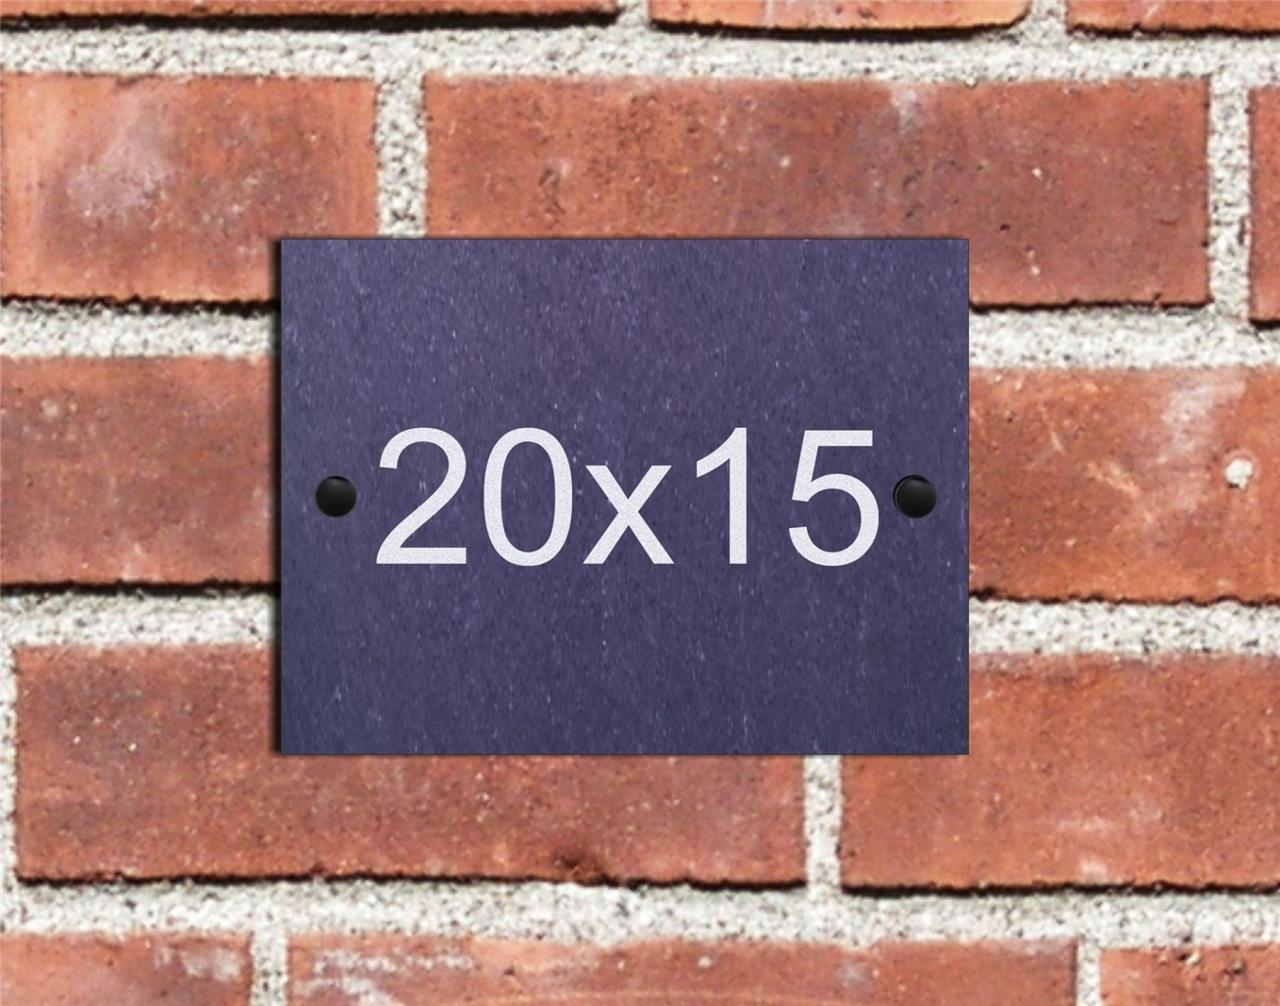 17 X 13cm número de puerta de casa de pizarra Firmar/Placa D1 Rosa Diseño sólo £ .9 .99 